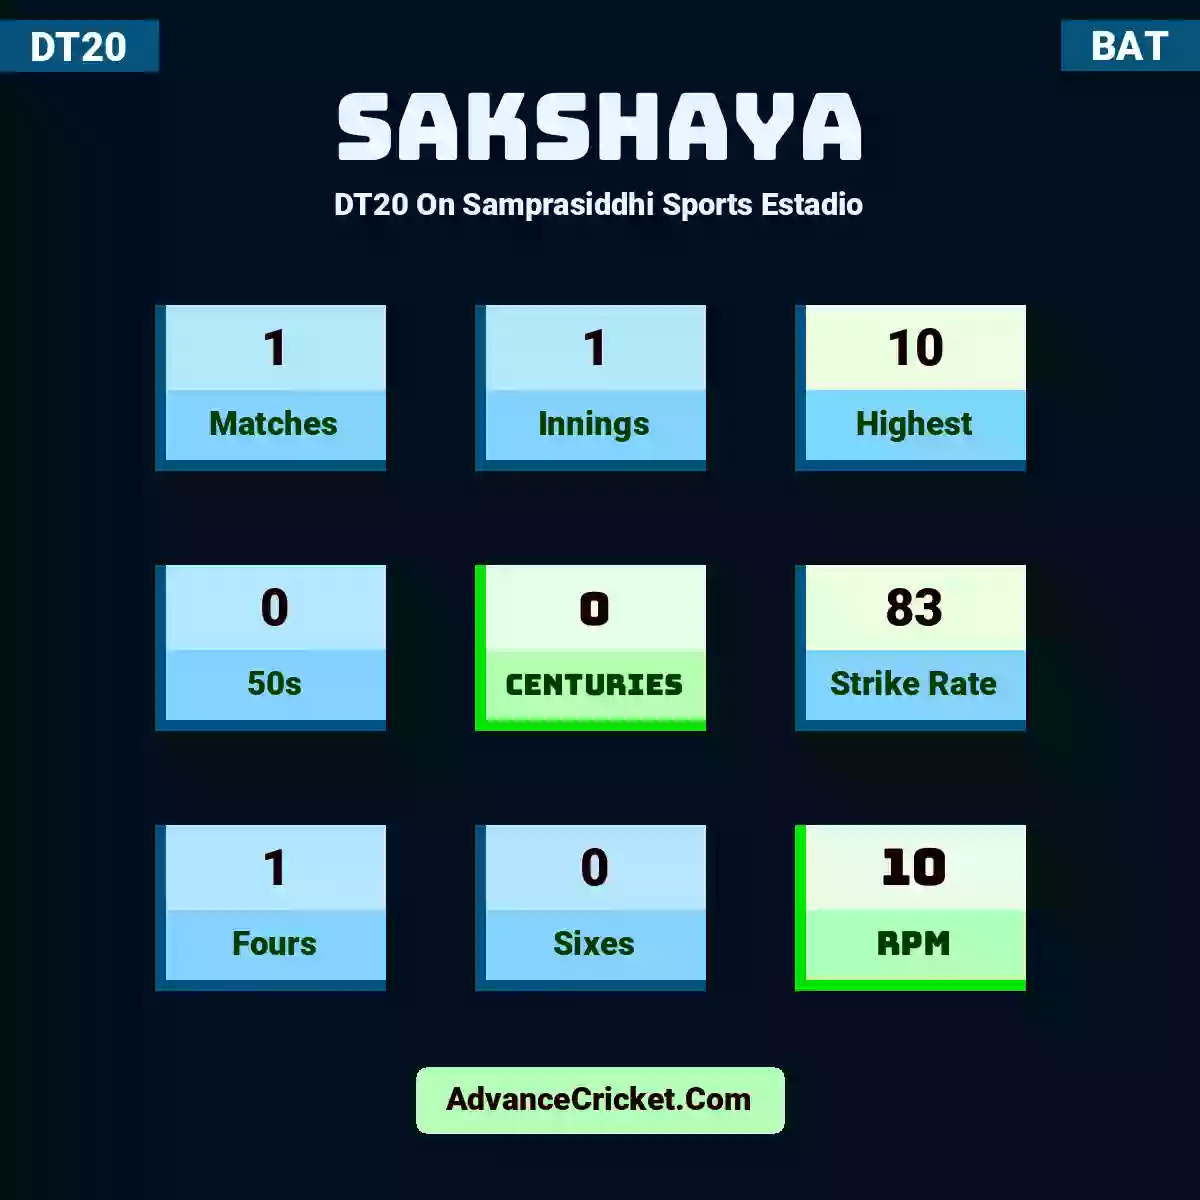 SAkshaya DT20  On Samprasiddhi Sports Estadio, SAkshaya played 1 matches, scored 10 runs as highest, 0 half-centuries, and 0 centuries, with a strike rate of 83. S.Akshaya hit 1 fours and 0 sixes, with an RPM of 10.